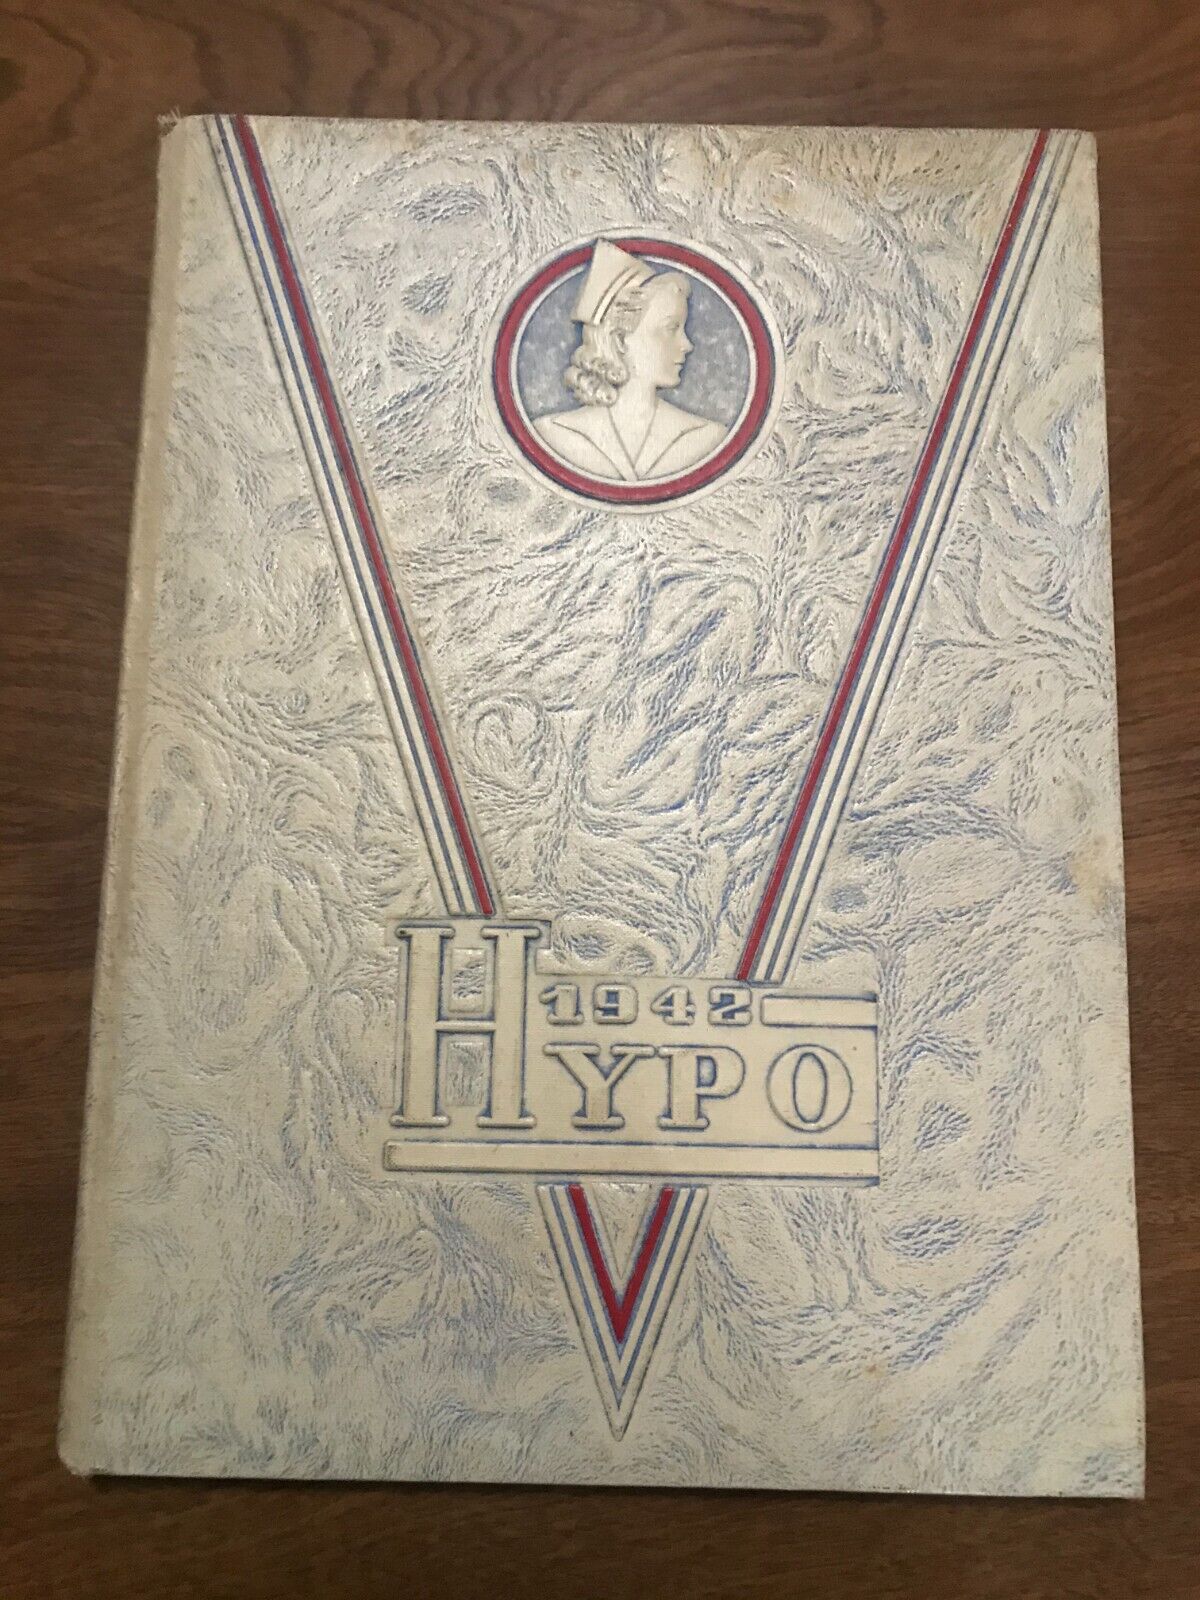 1942 Hypo- Mound Park Hospital School of Nursing Yearbook- St. Petersburg, FL.